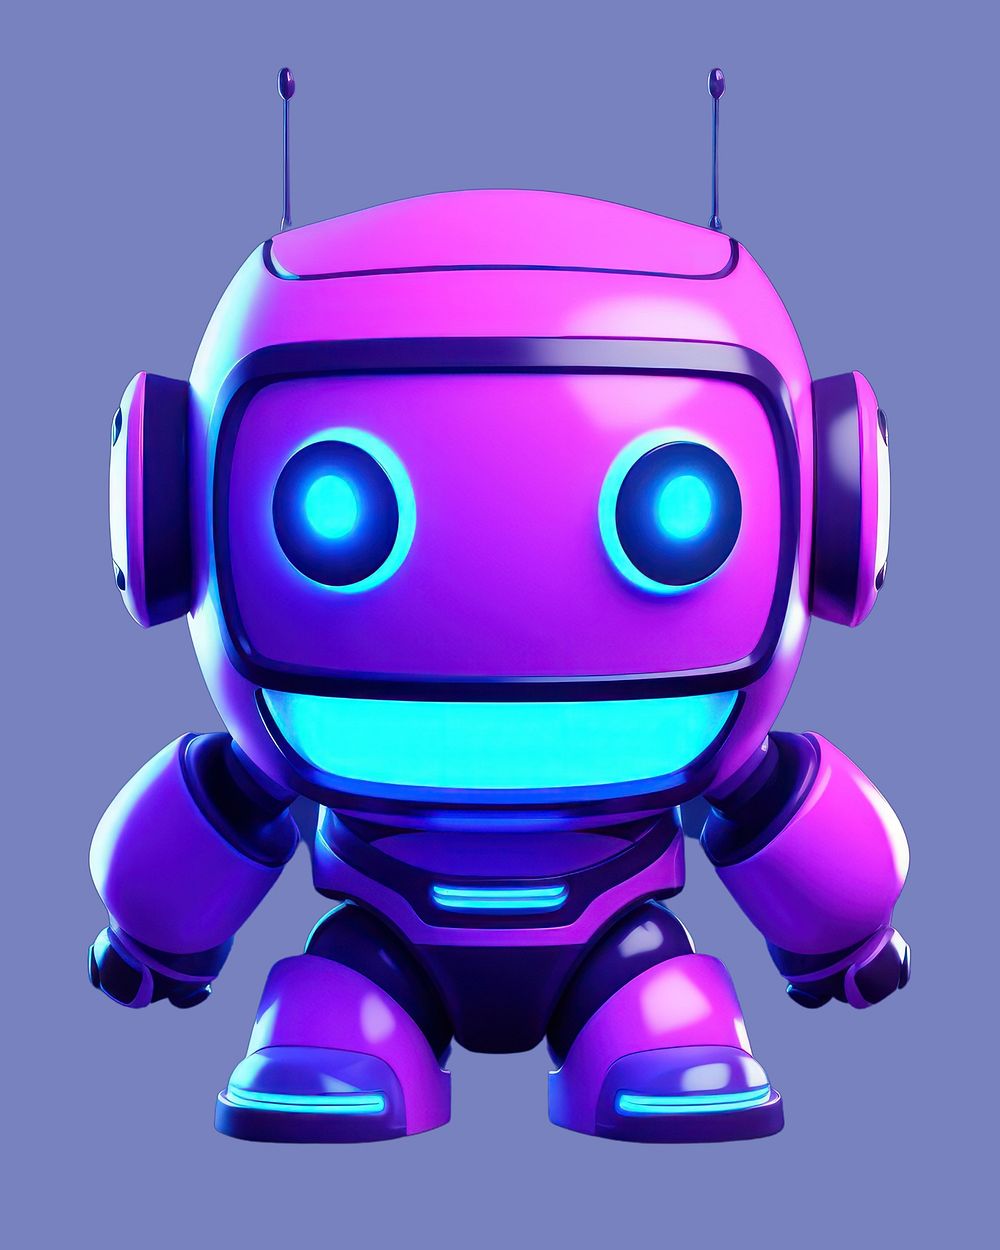 Cute futuristic purple robot illustration